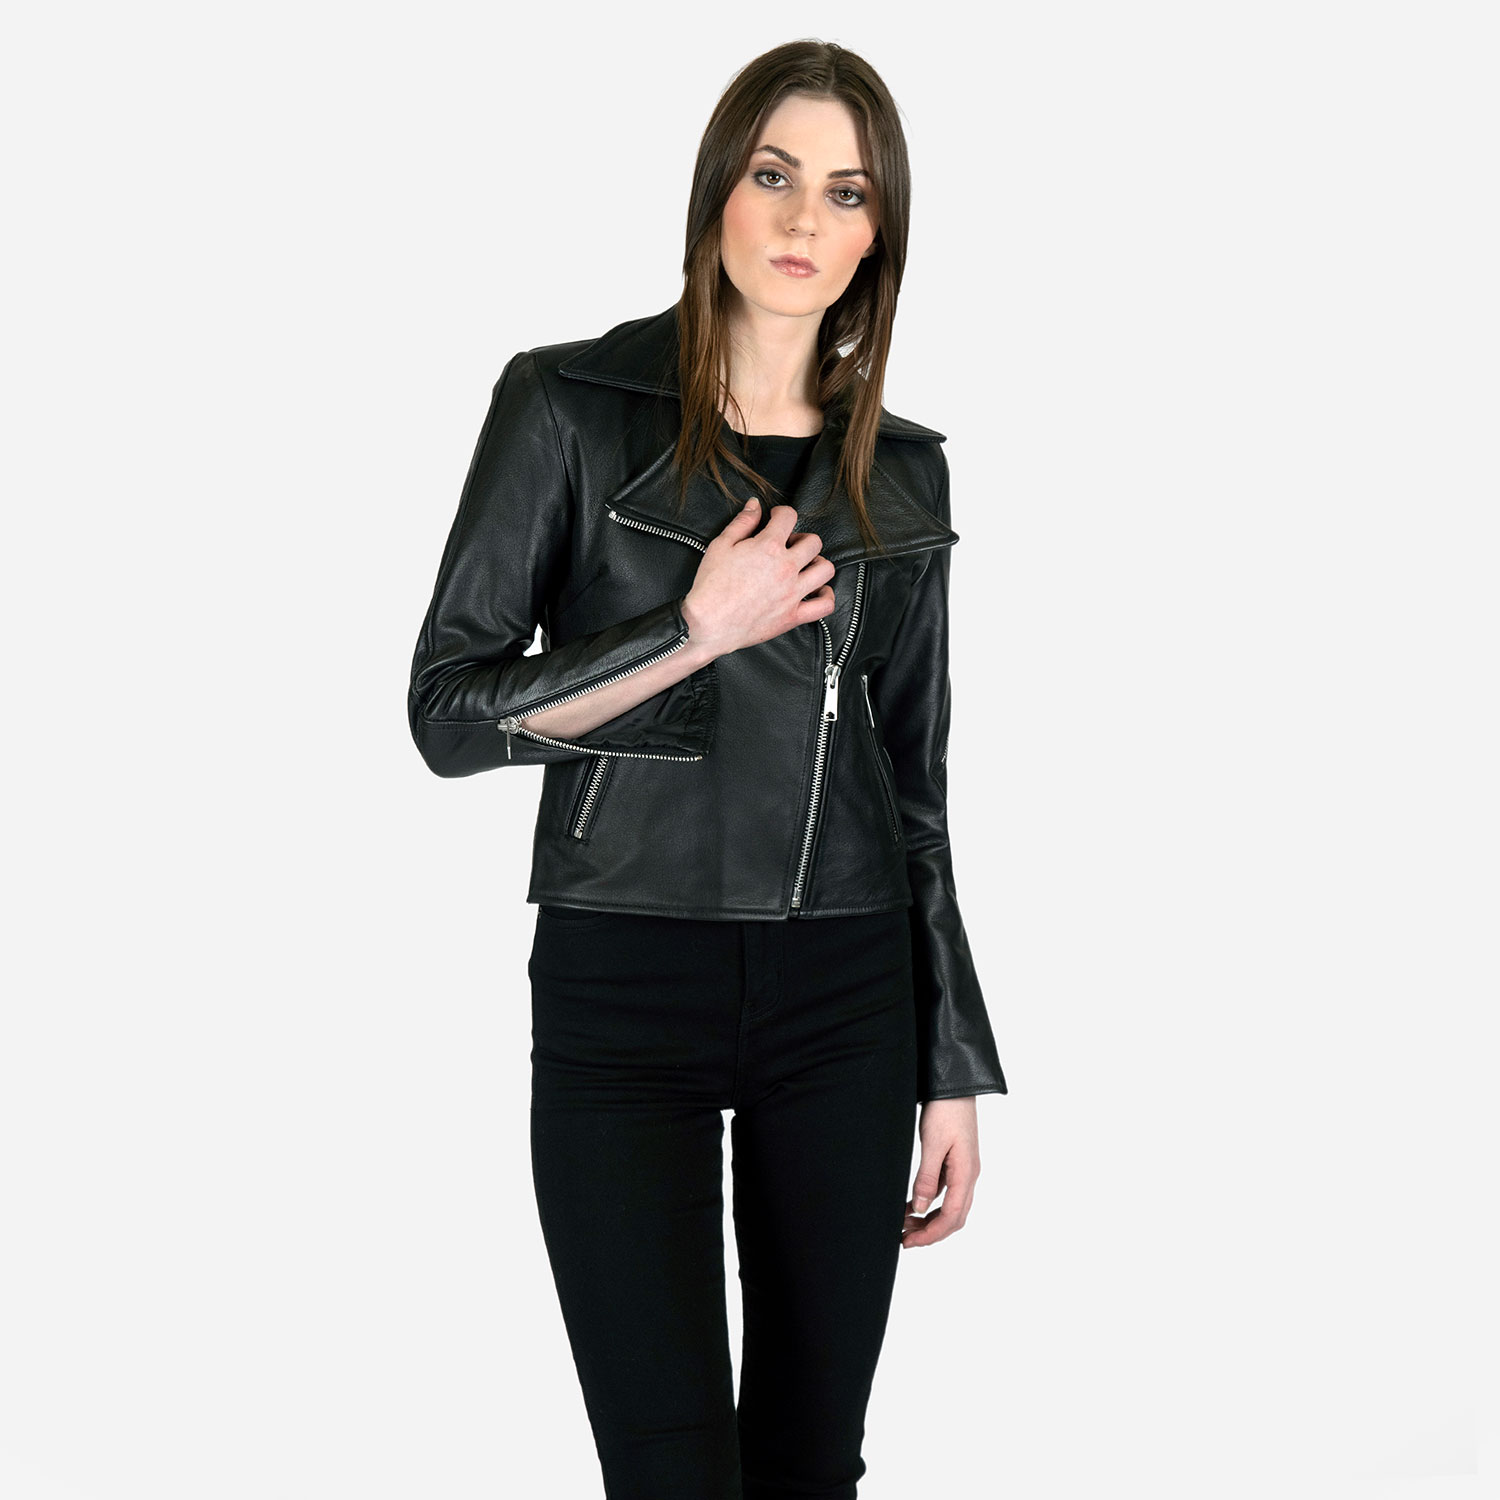 Flash - Leather Jacket (Size XS, S, M, L, XL, 2XL, 3XL, 4XL 